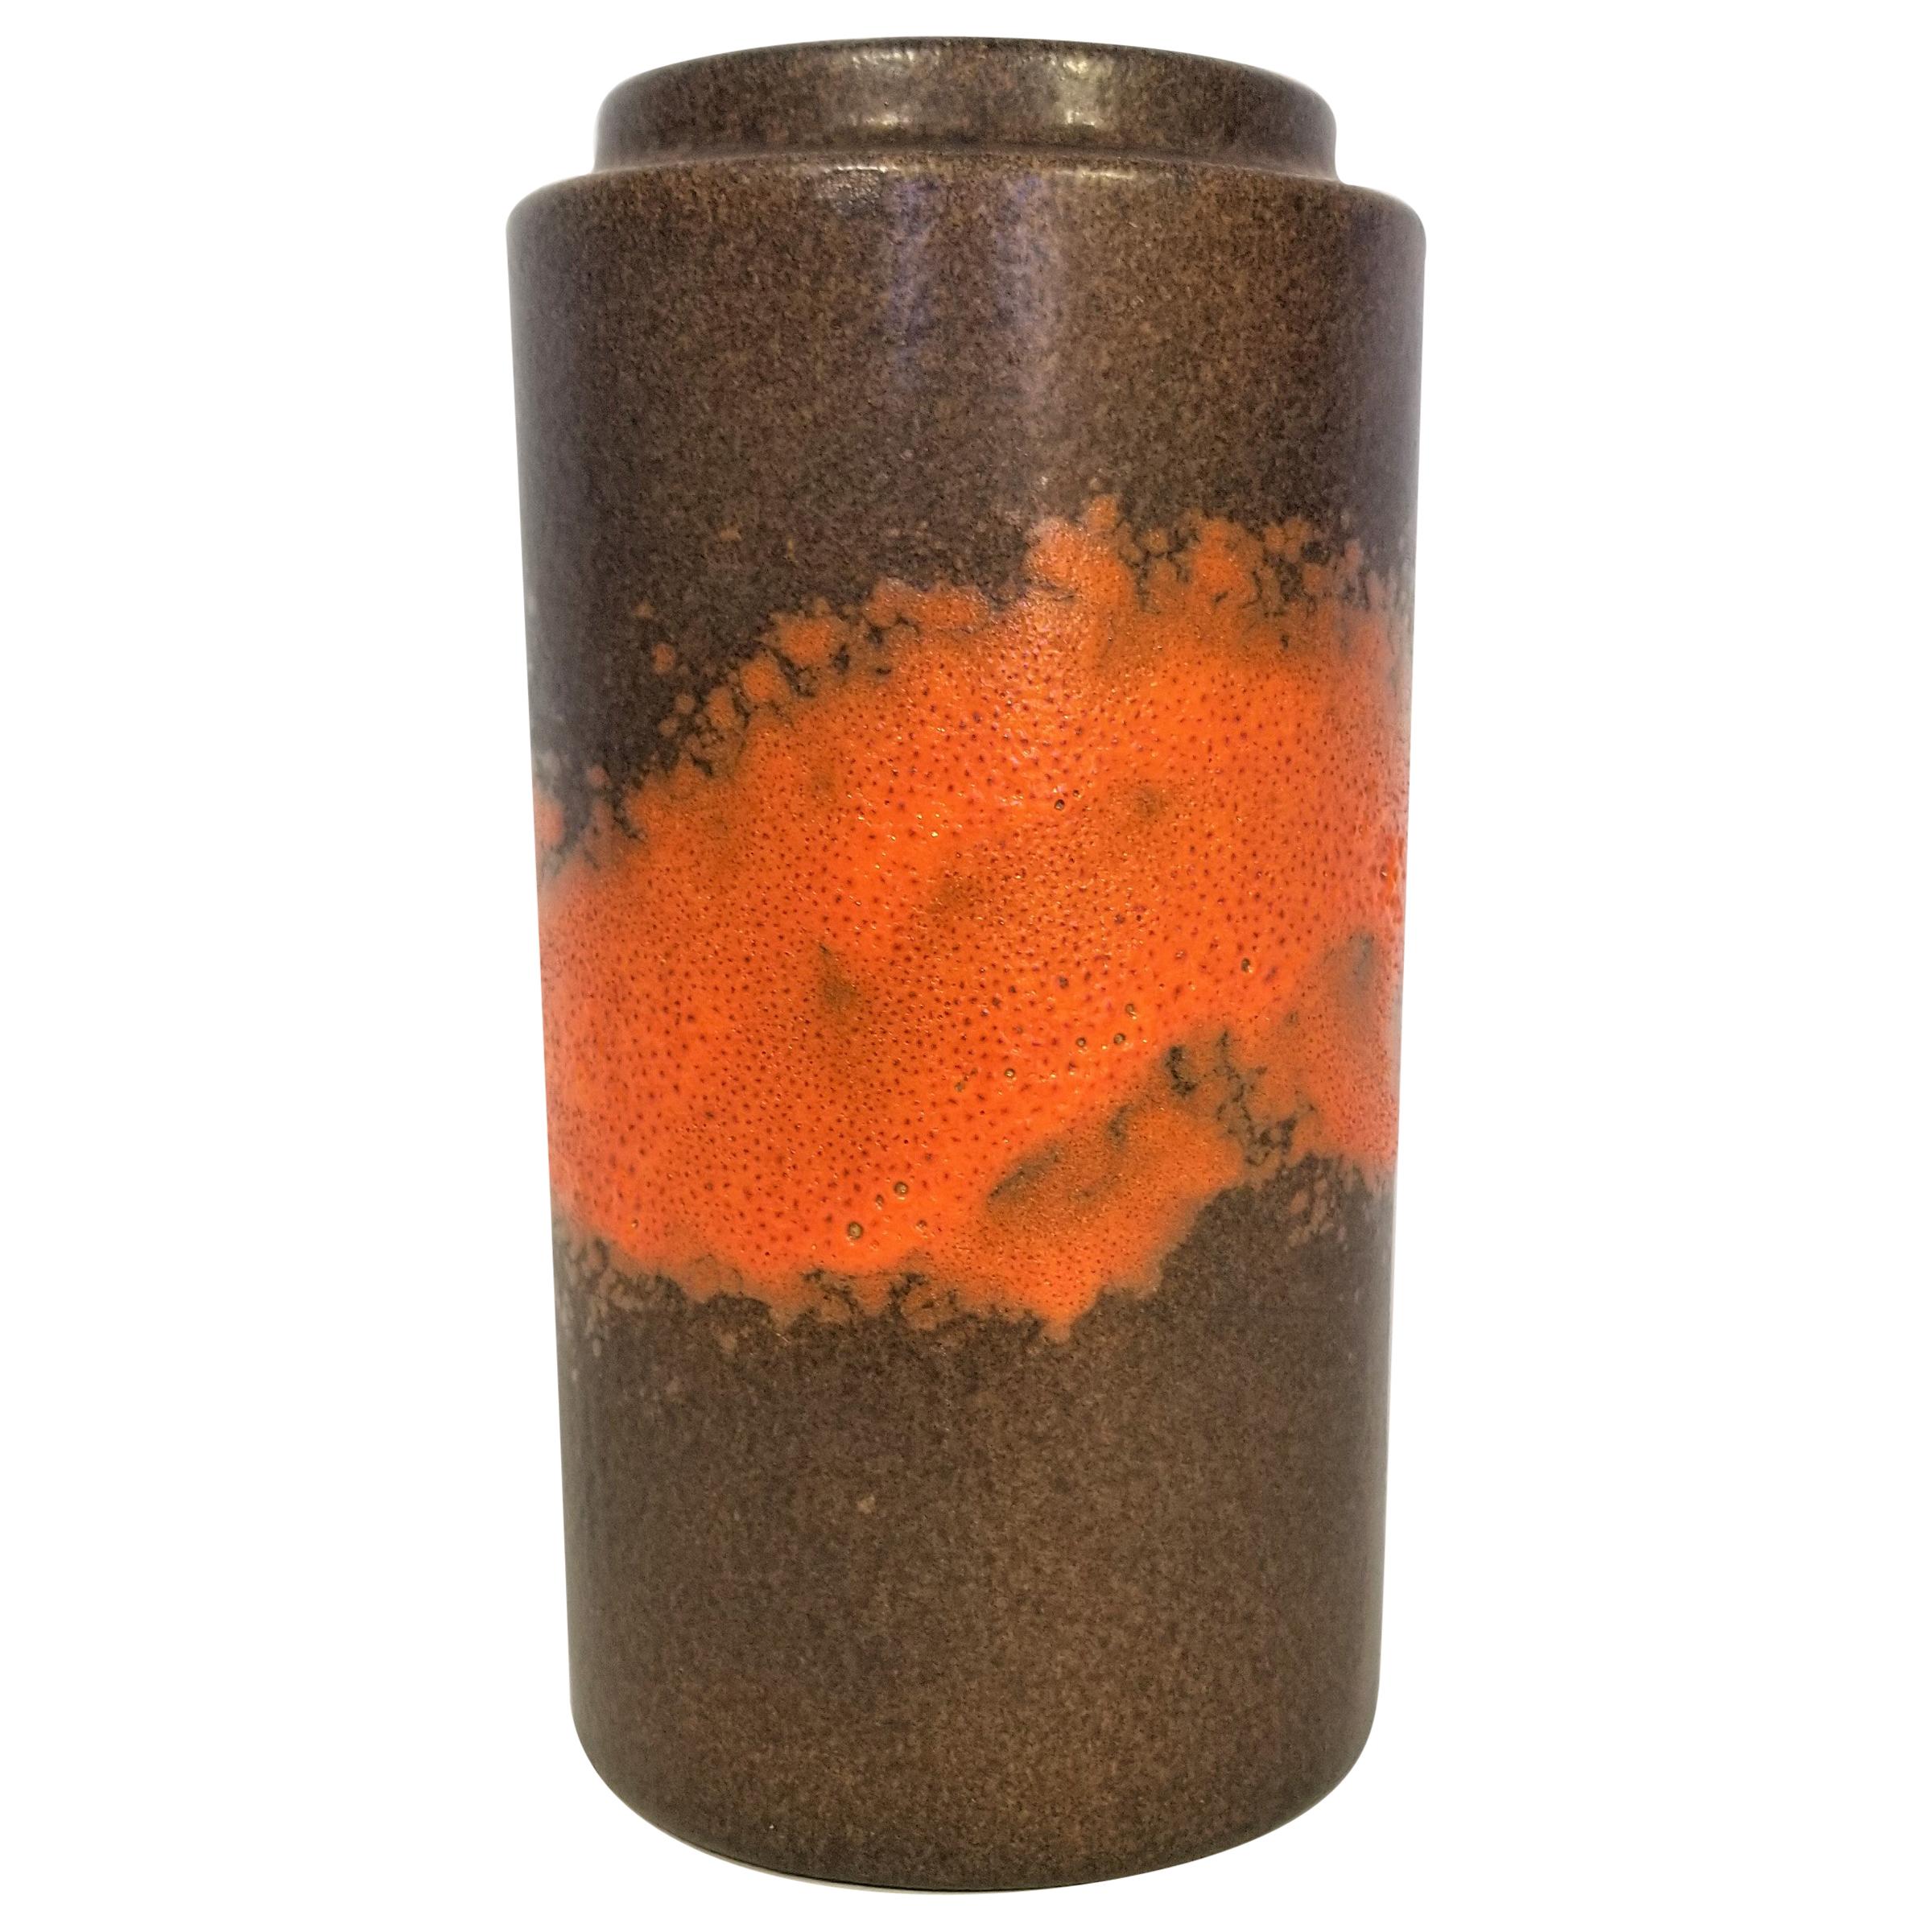 Vase West Germany Midcentury 1960s Glazed Ceramic Abstract Brown Orange